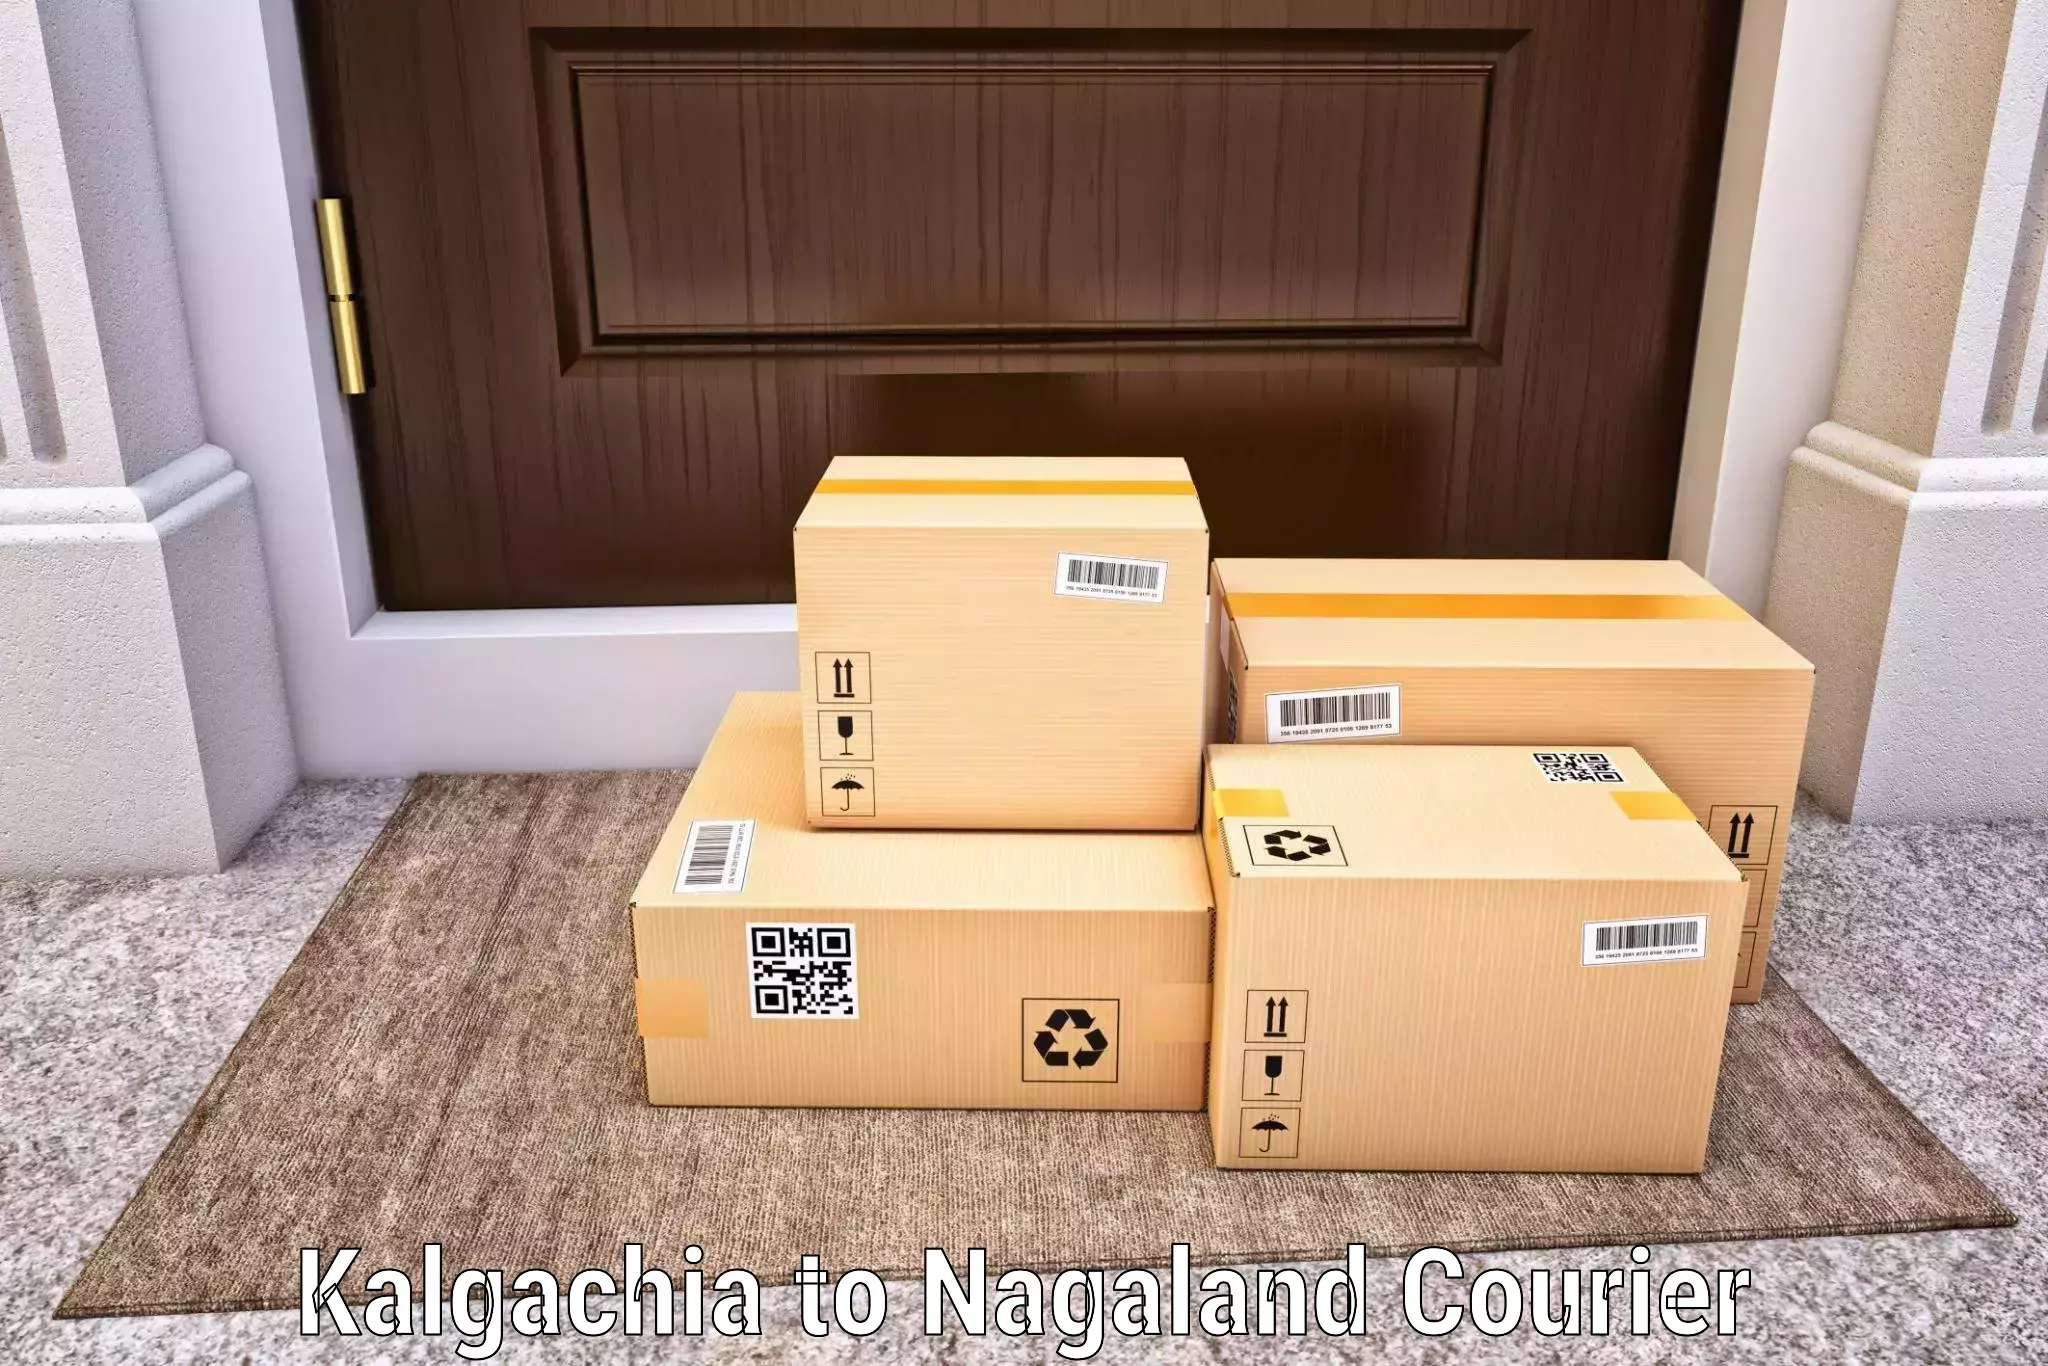 Courier service comparison in Kalgachia to NIT Nagaland